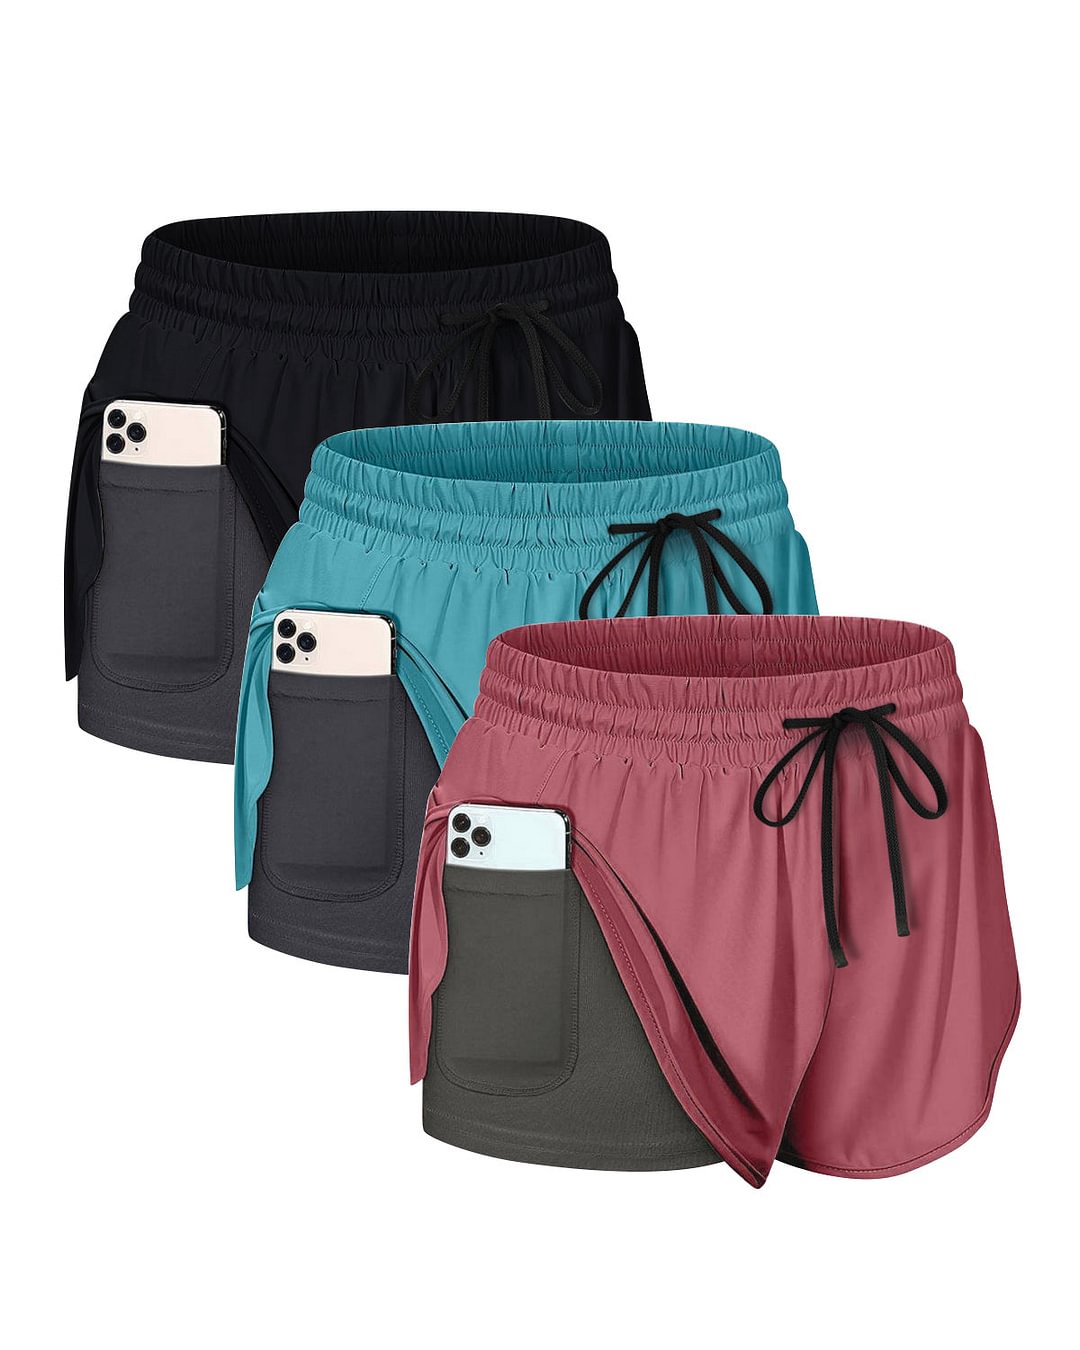 Women's Running Shorts Drawstring Waist with Liner Phone Pockets 3-pack